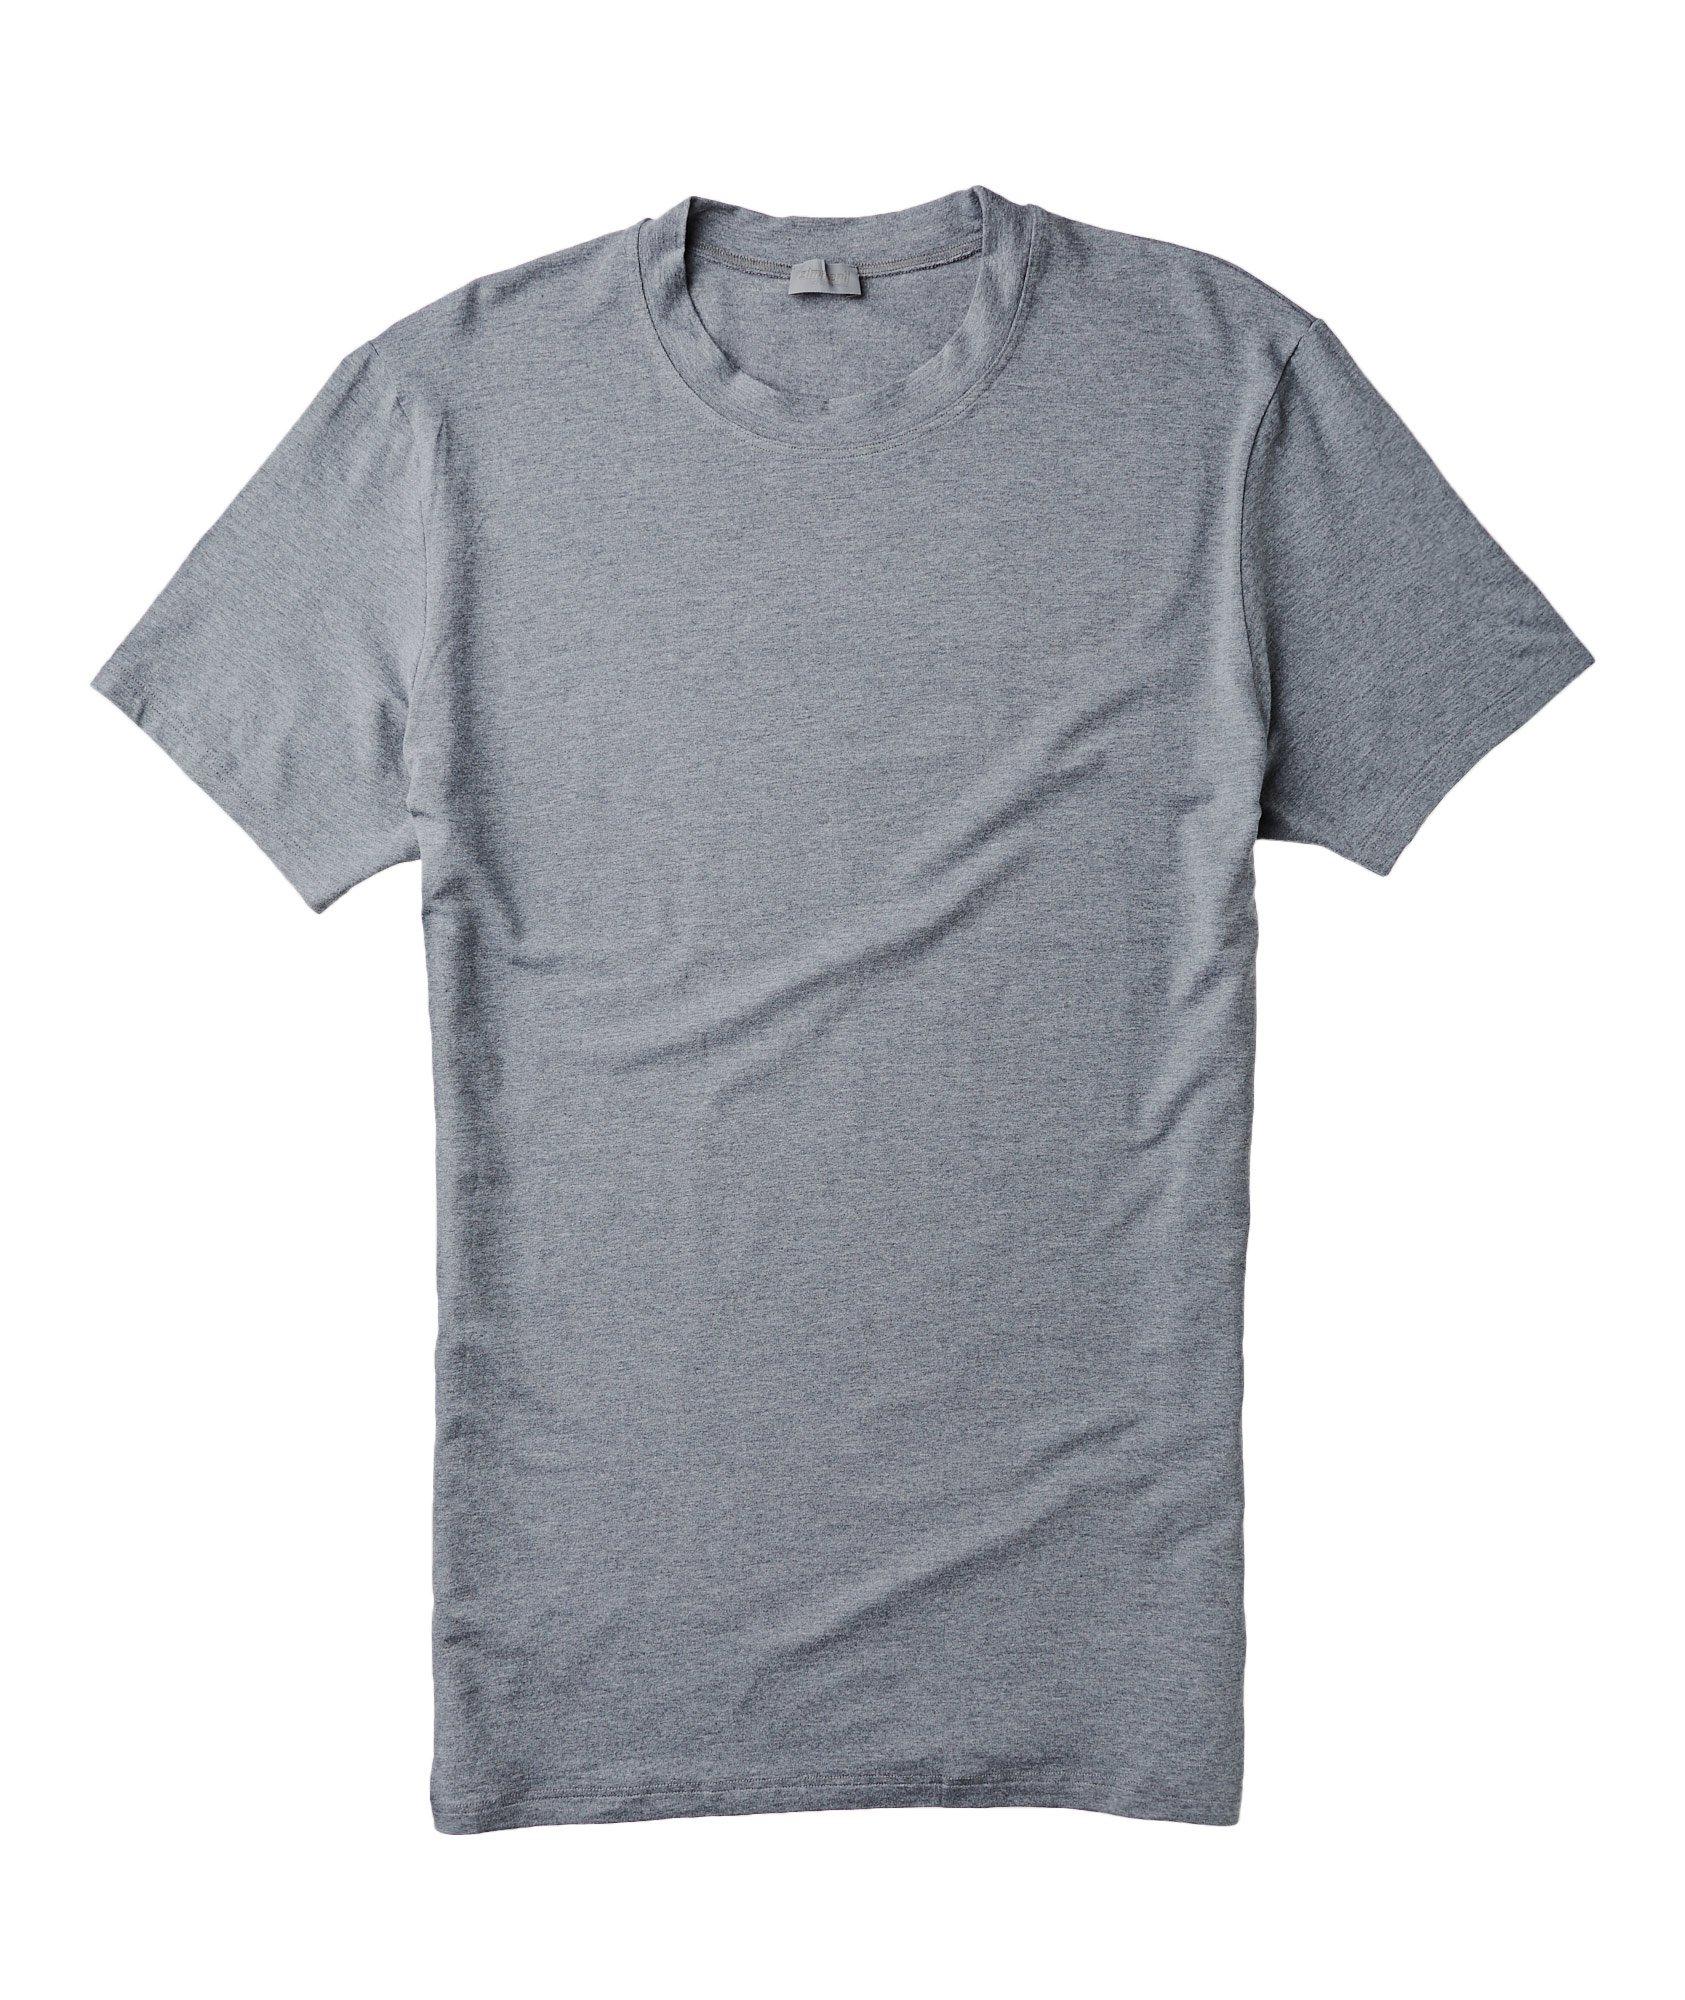 700 Pureness Jersey T-Shirt image 0